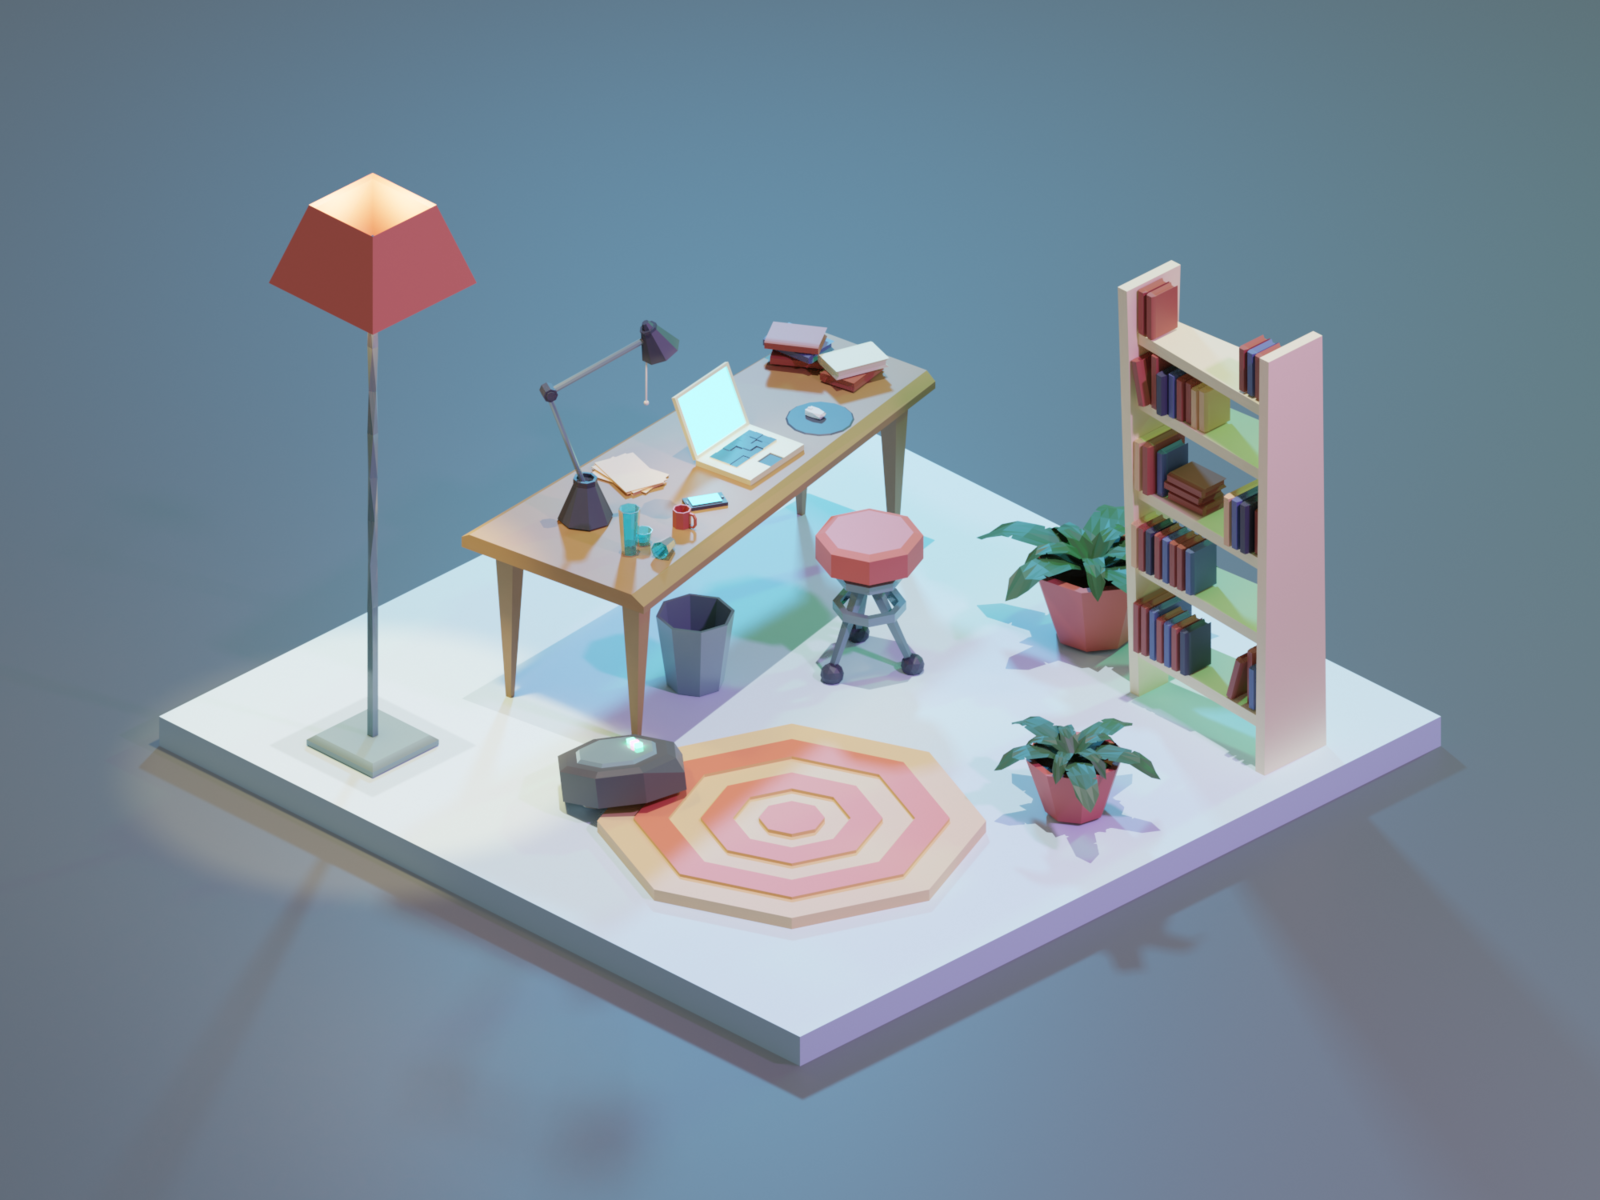 An Aesthetic Workspace by Reijo on Dribbble